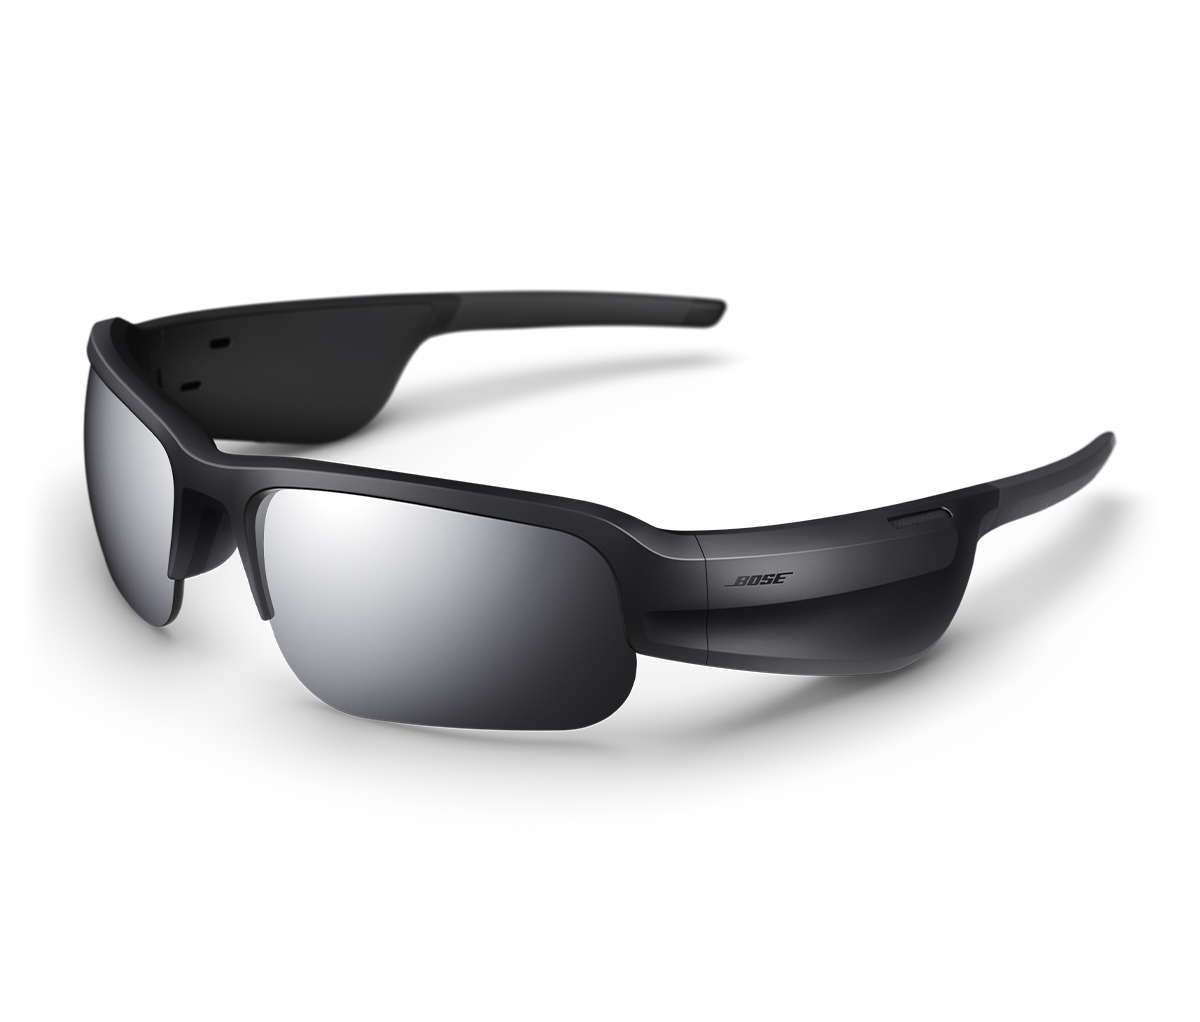 Arnette Sunglasses frame and black glass WOMEN FASHION Accessories Sunglasses discount 75% Black Single 